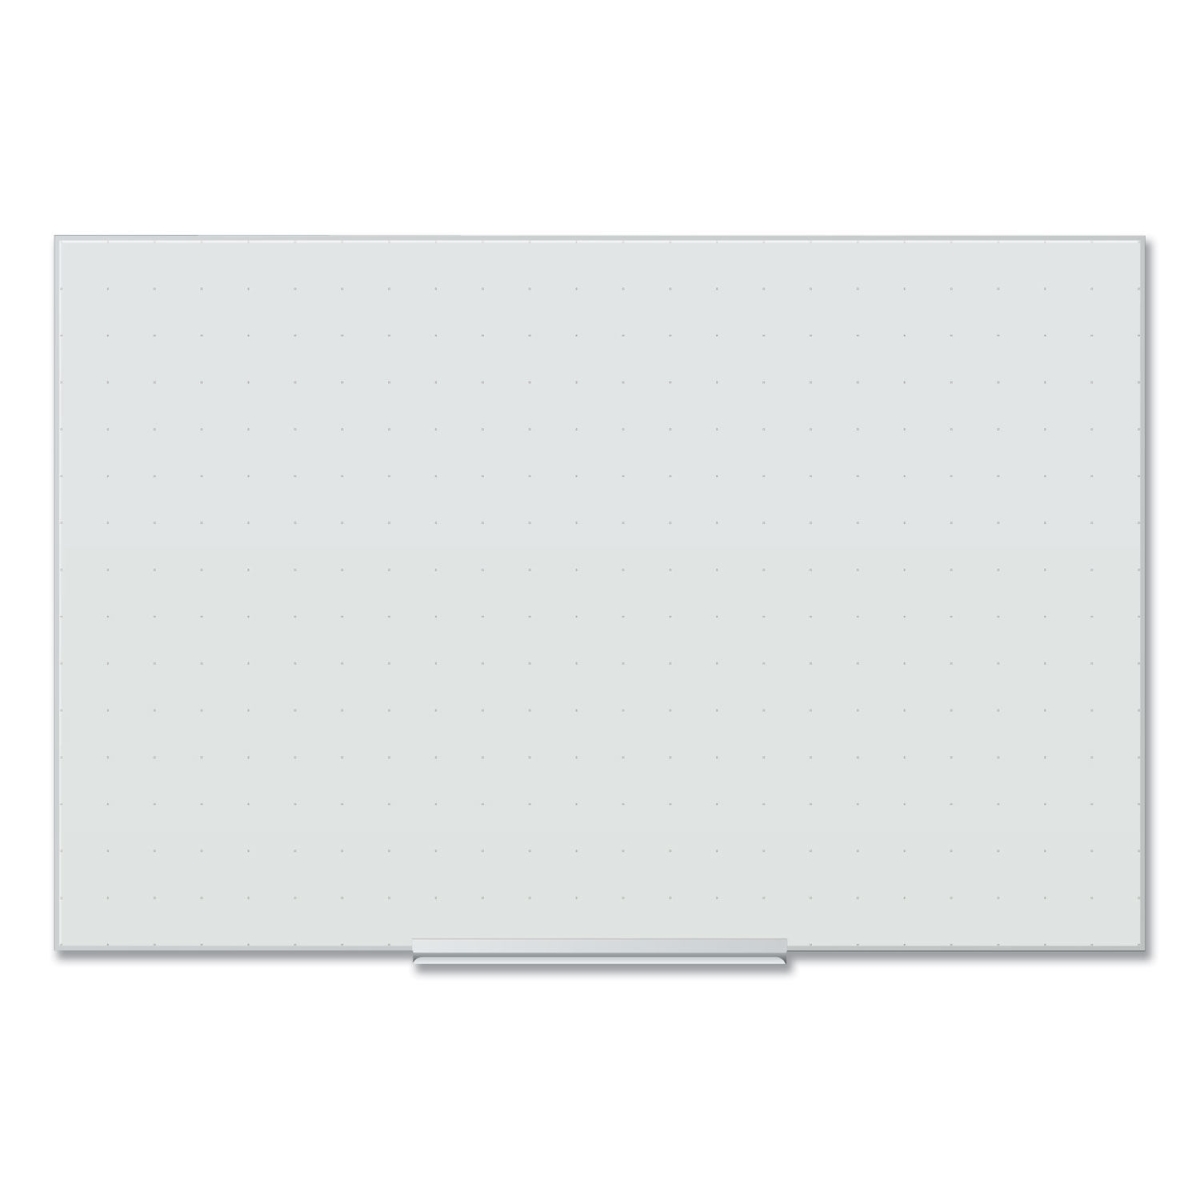 Ubrands Ubr2798u0001 35 X 23 In. Grid Glass Dry Erase Board White